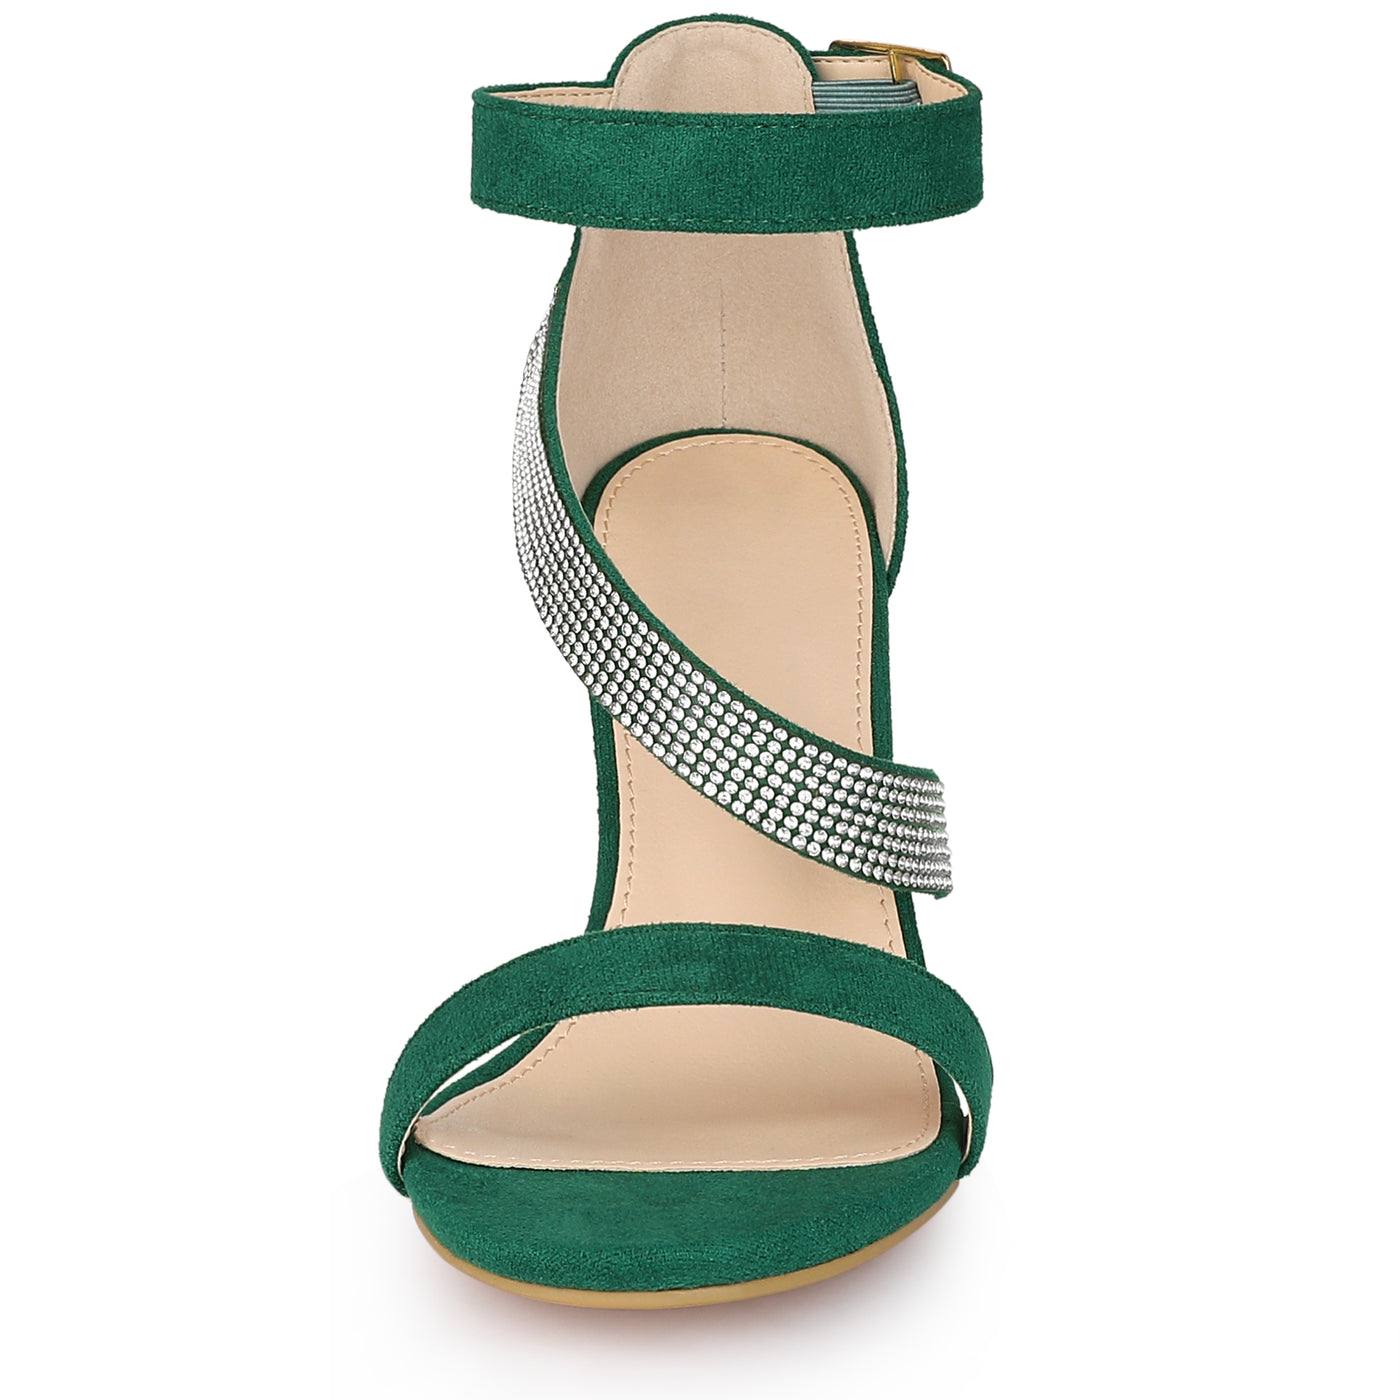 Allegra K Women's Rhinestone Open Toe Block Heels Sandals